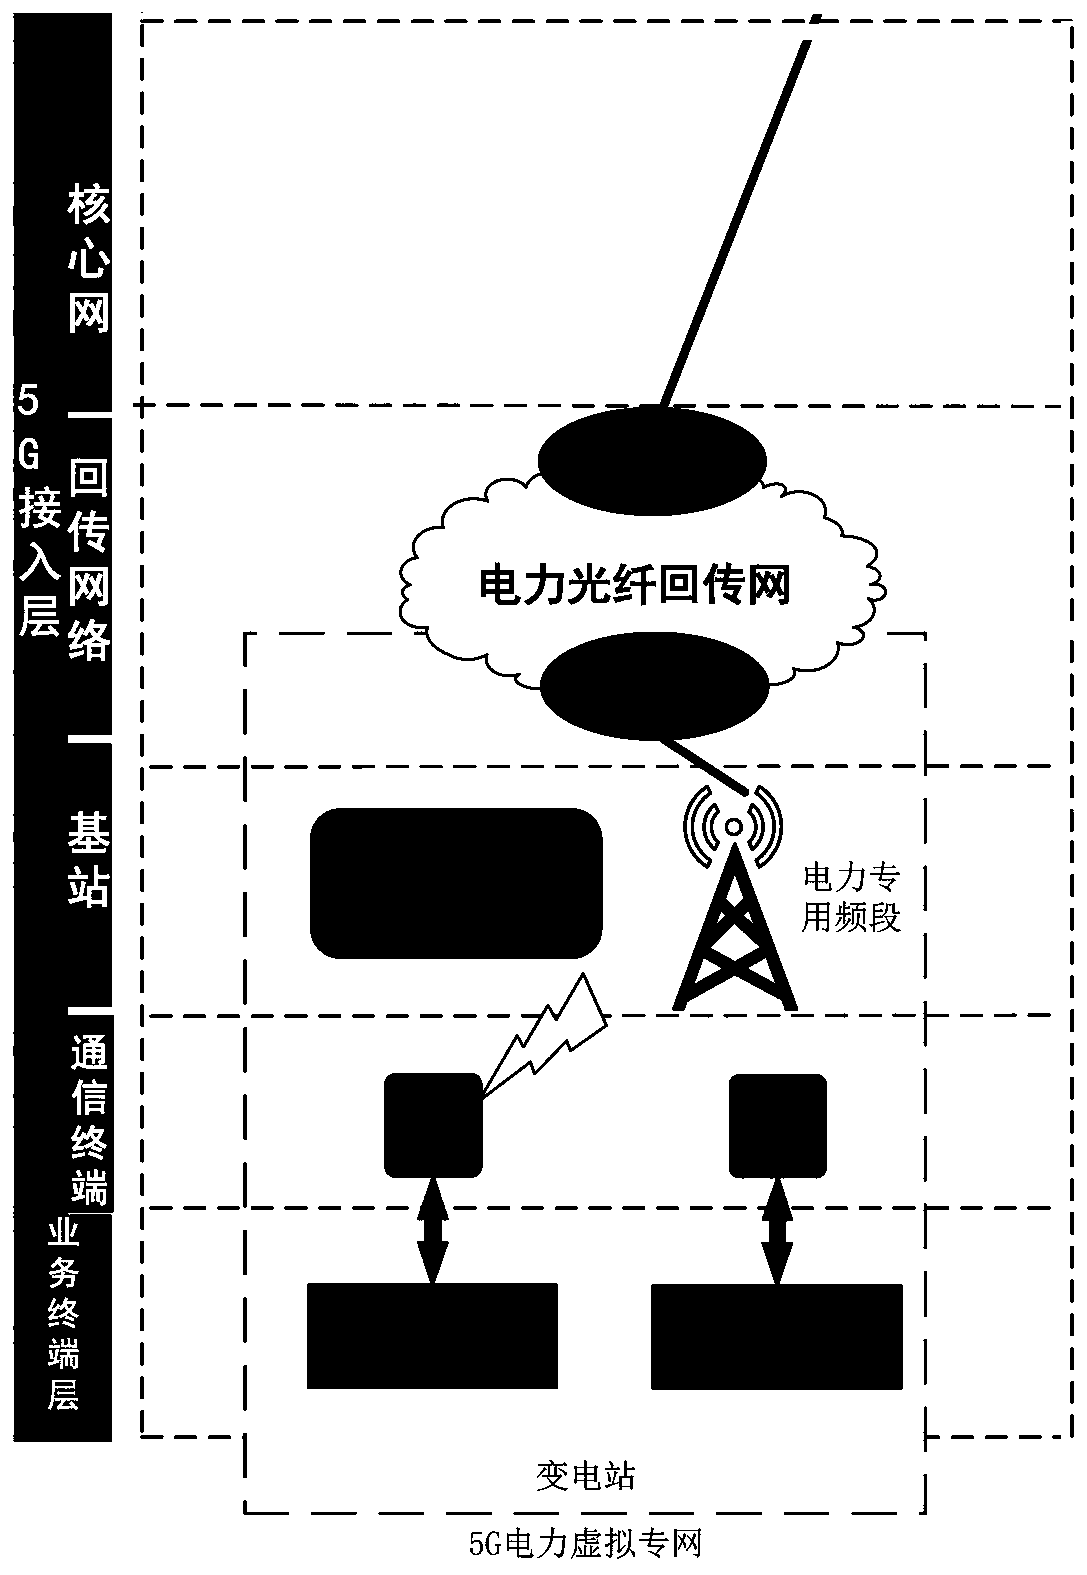 Broadband video service system of 5G power substation based on OTN transmission